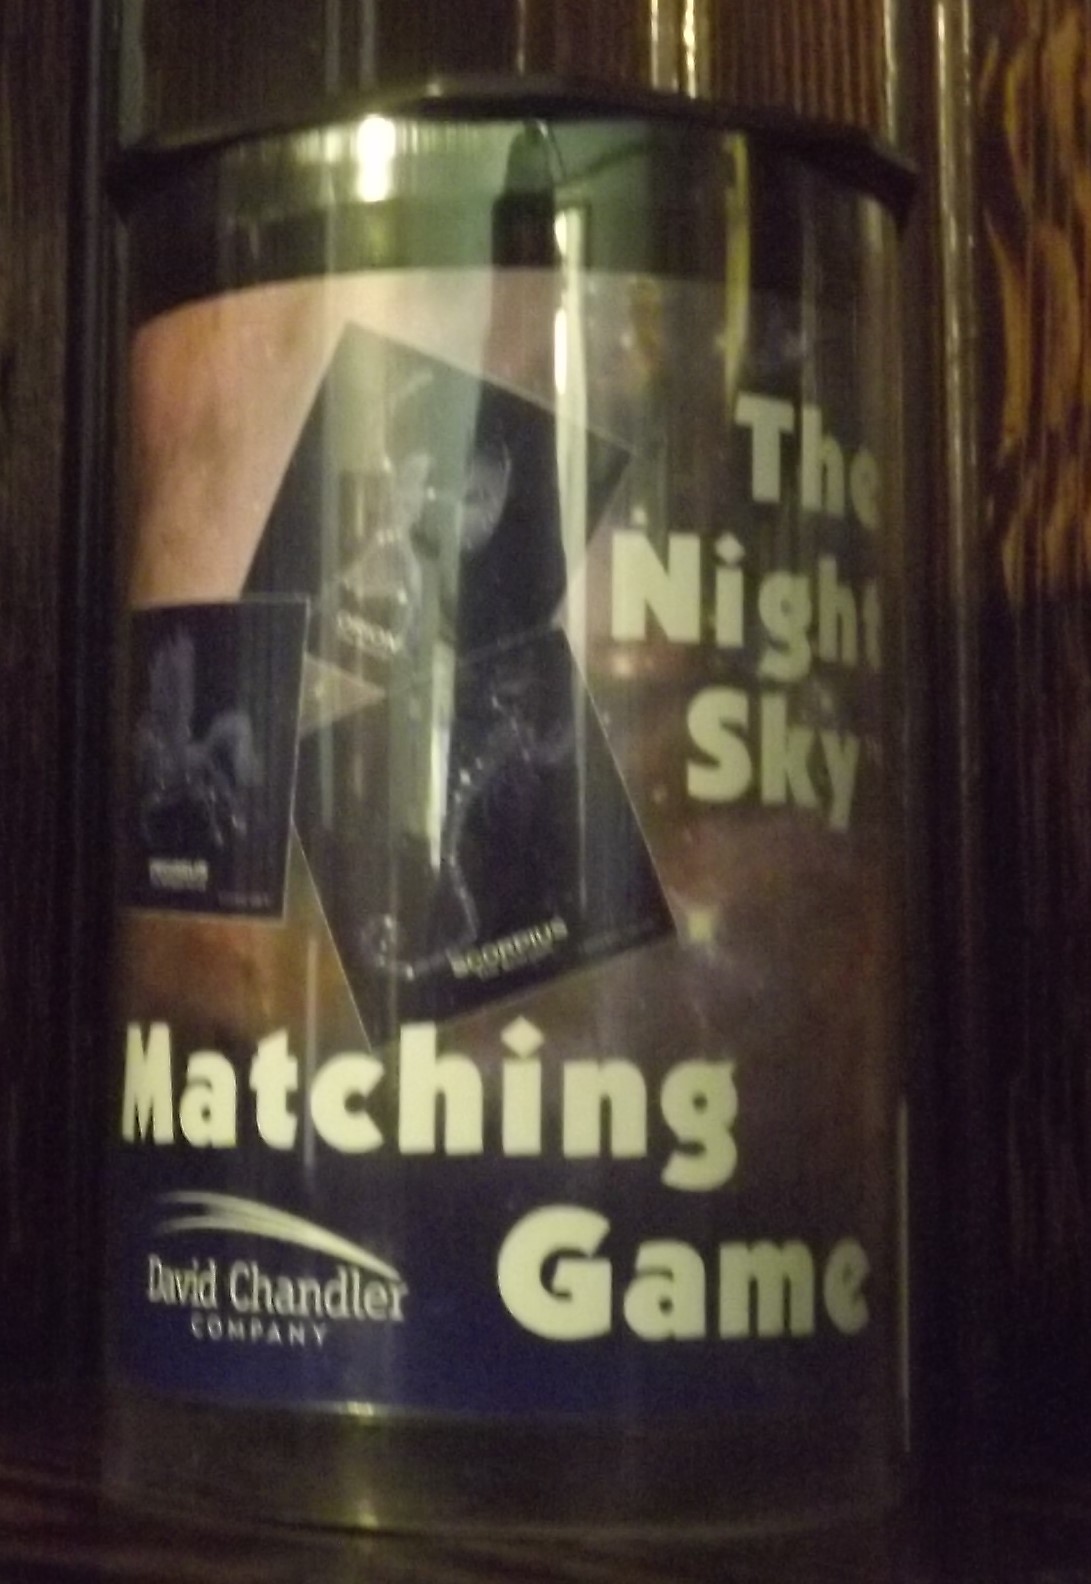 Night Sky Matching Game